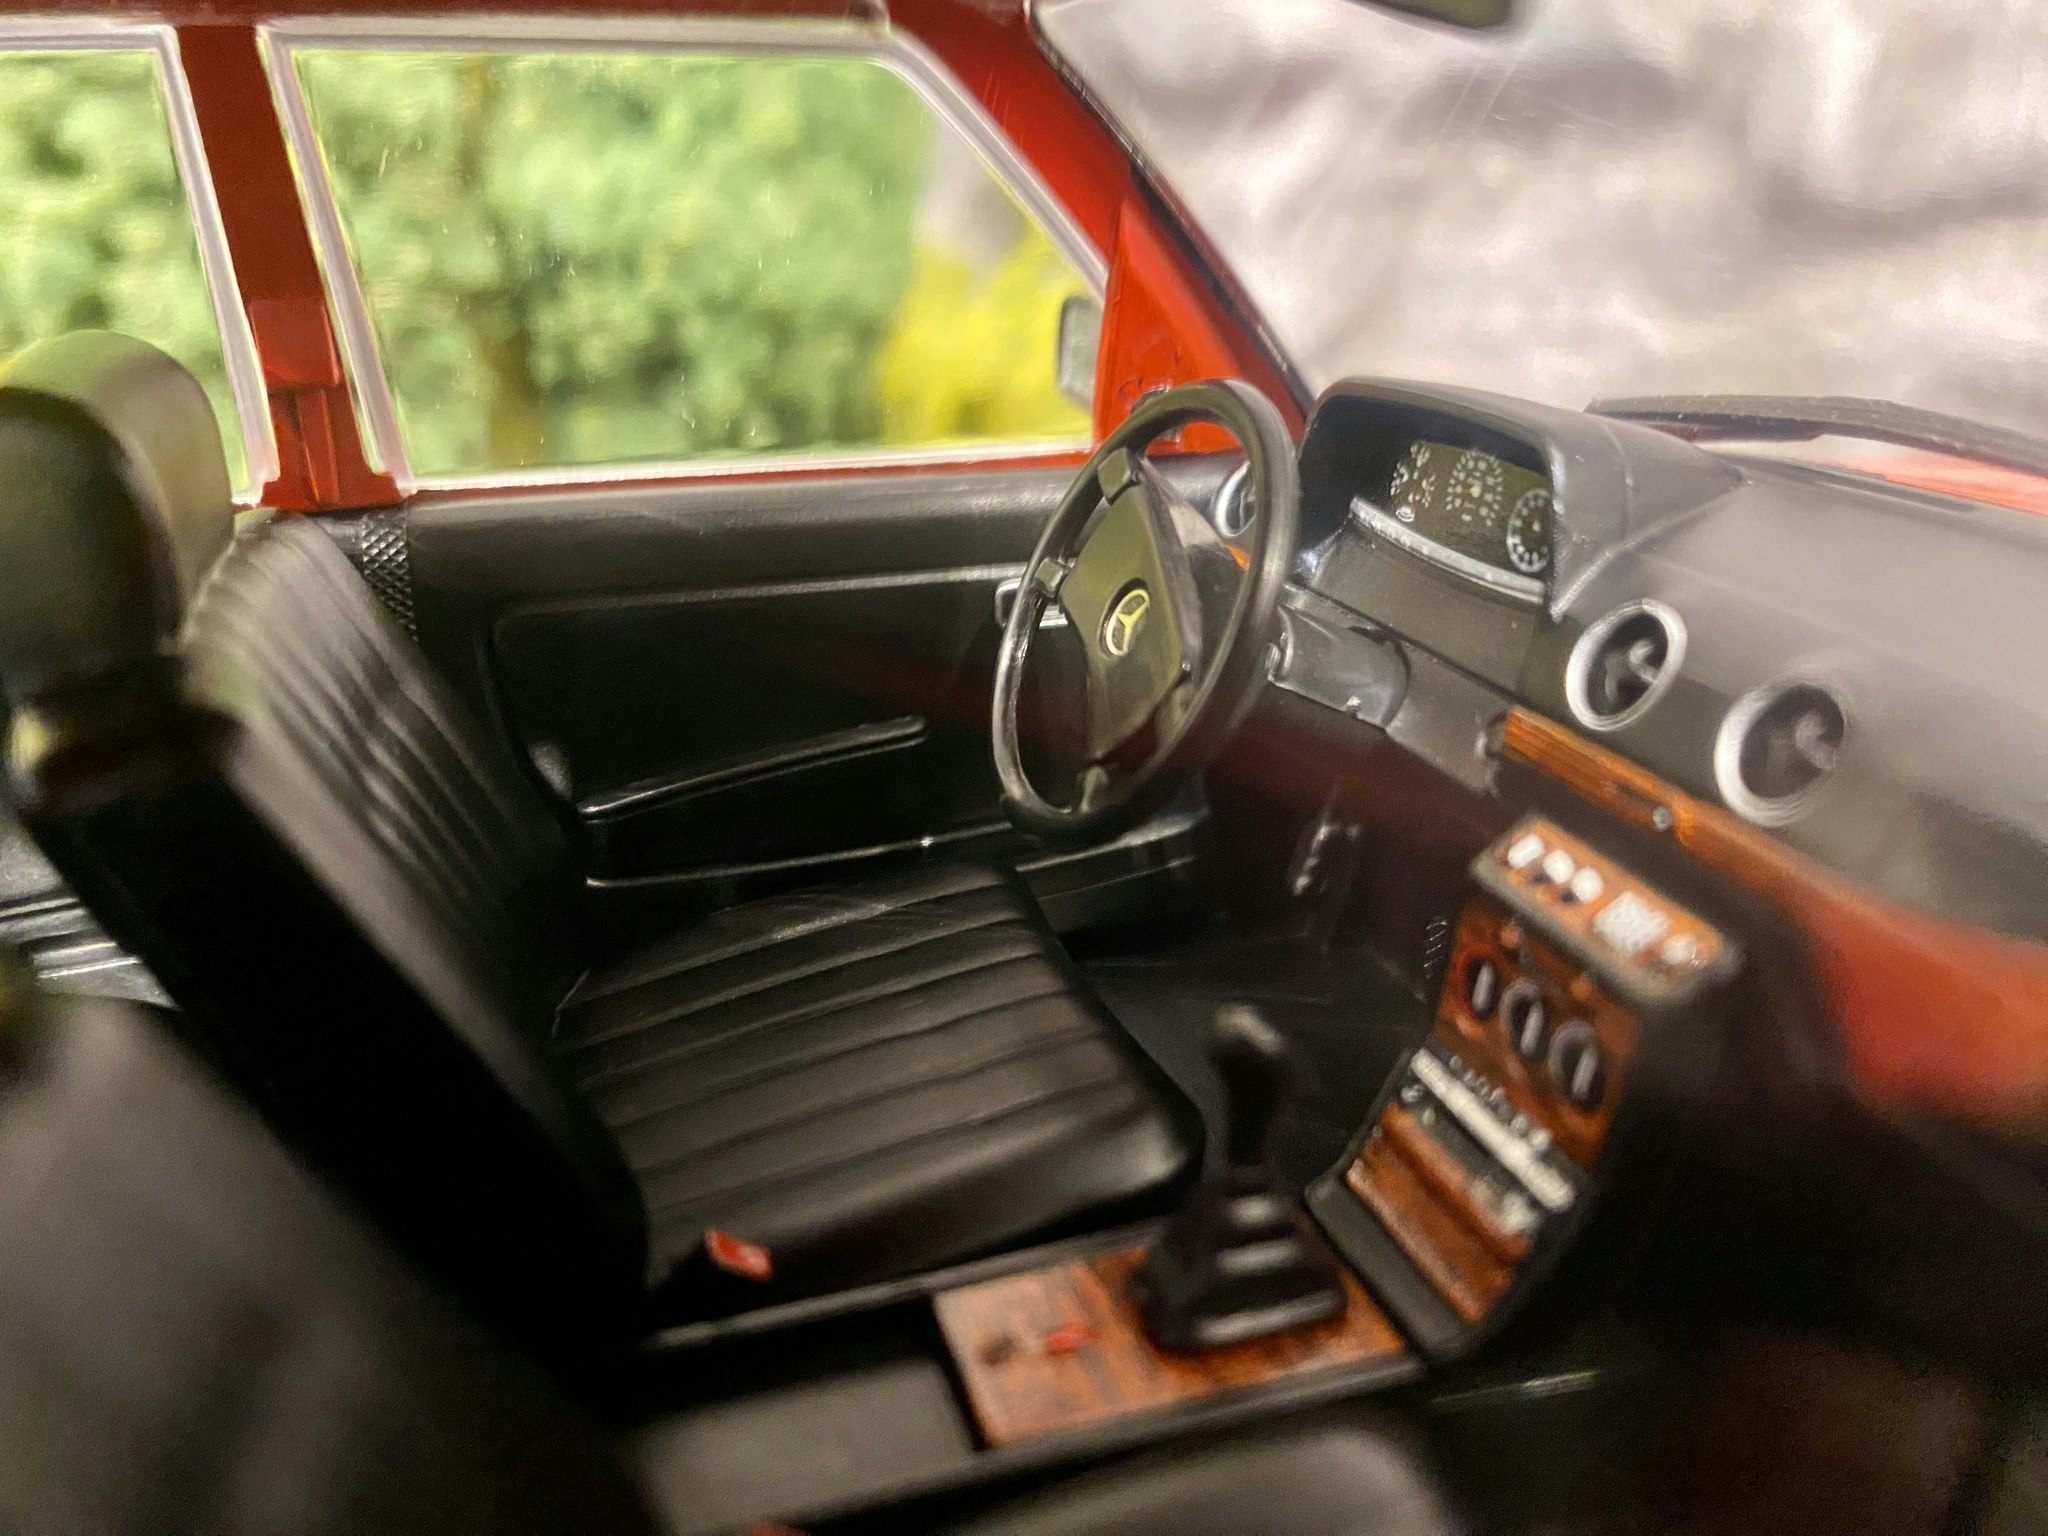 Skala 1/18 Mercedes-Benz 230E (W123) 1975, Red fr KK-Scale